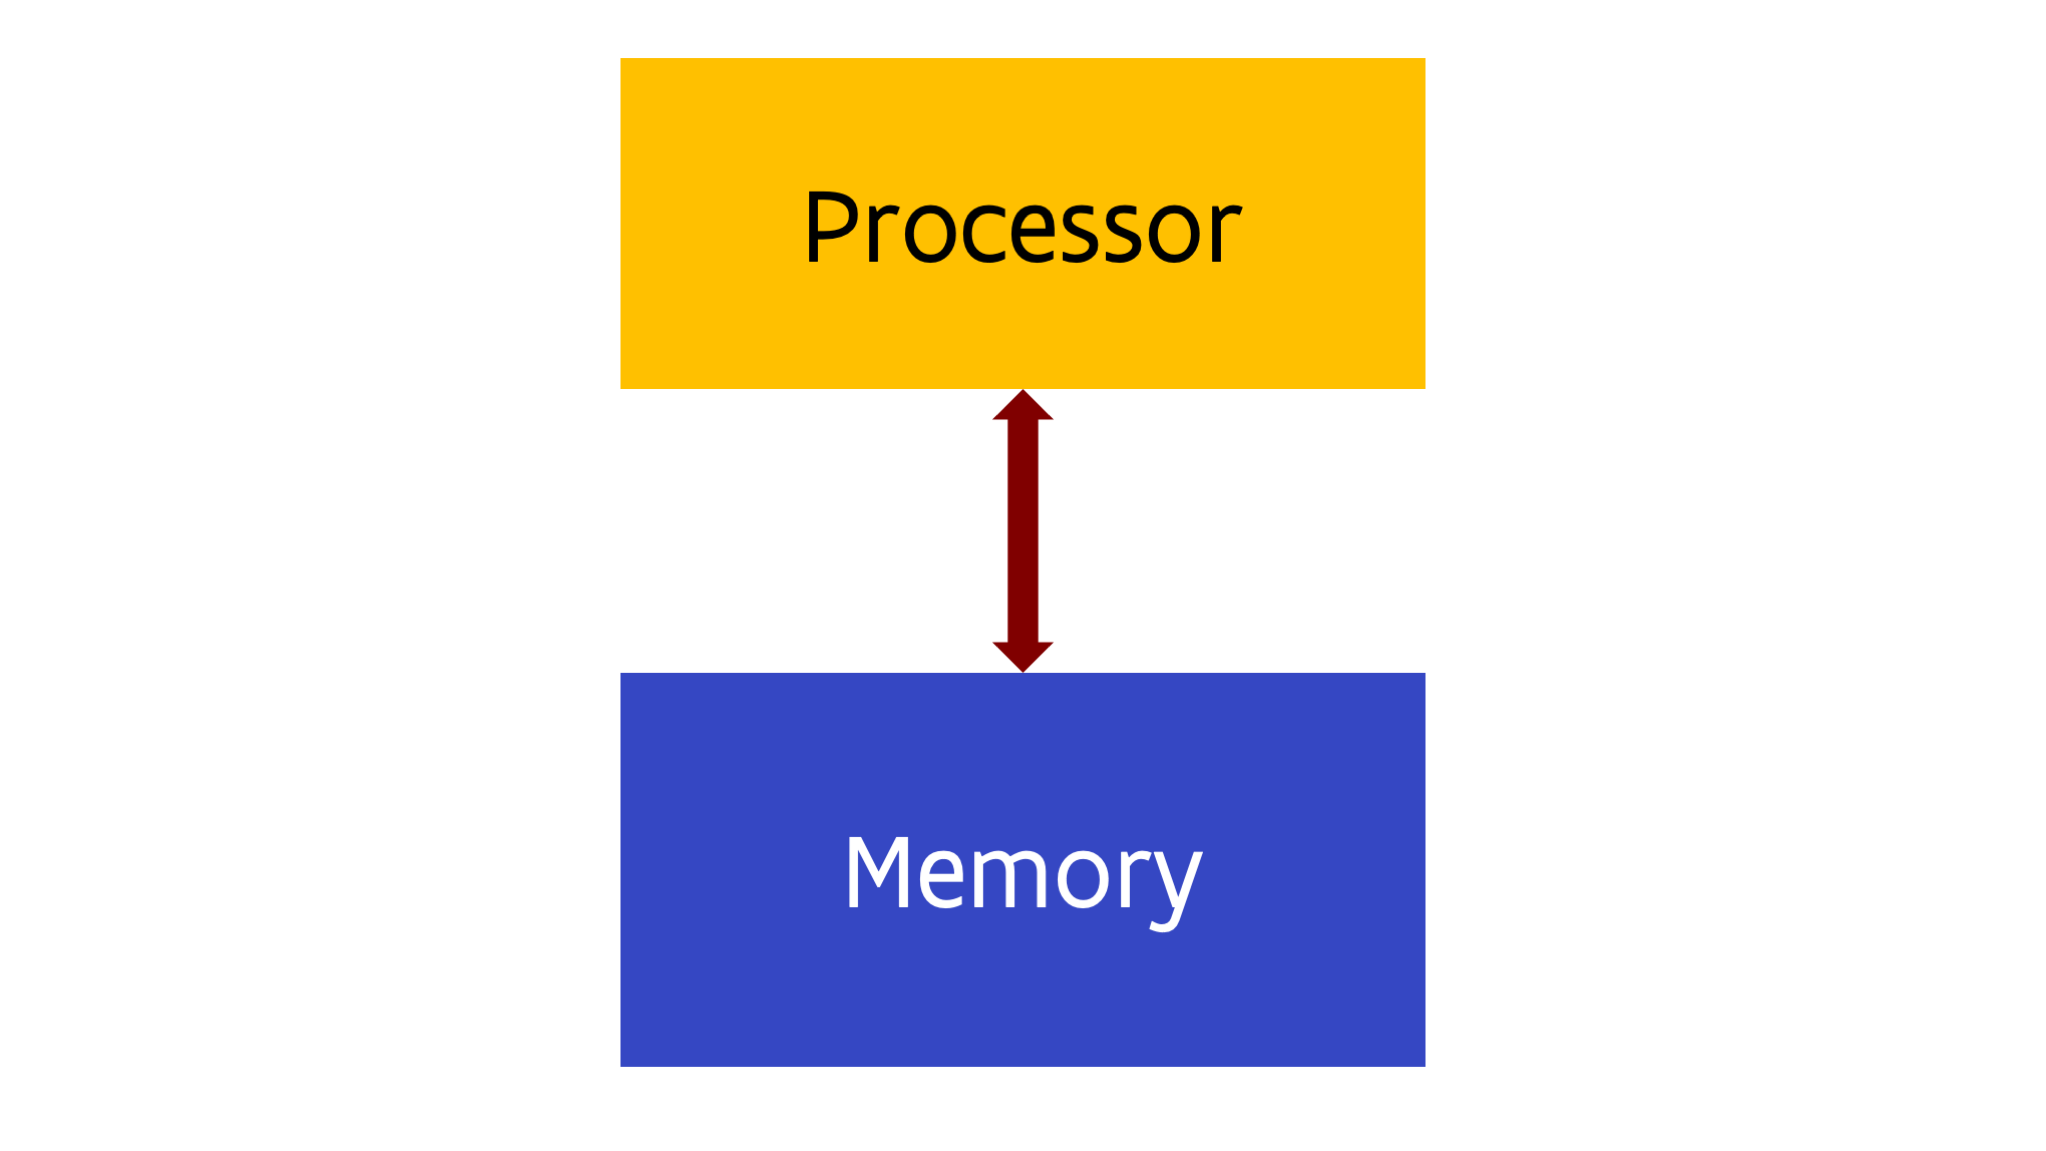 The basic CPU